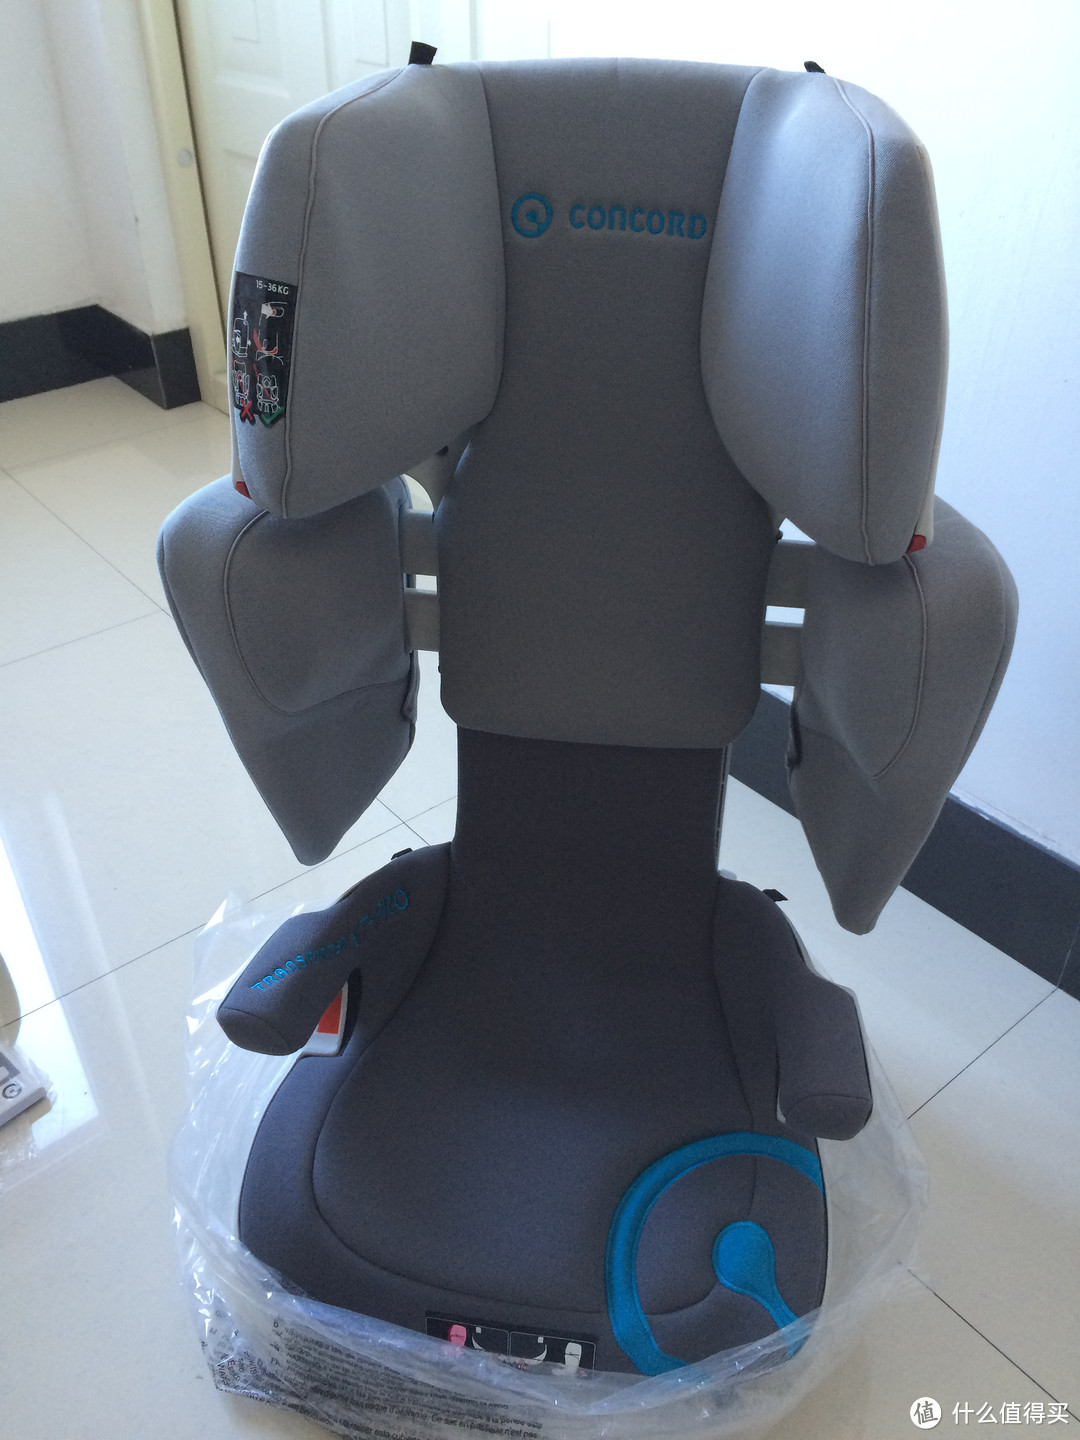 kids-comfort入手Concord Transformer XT Pro安全座椅